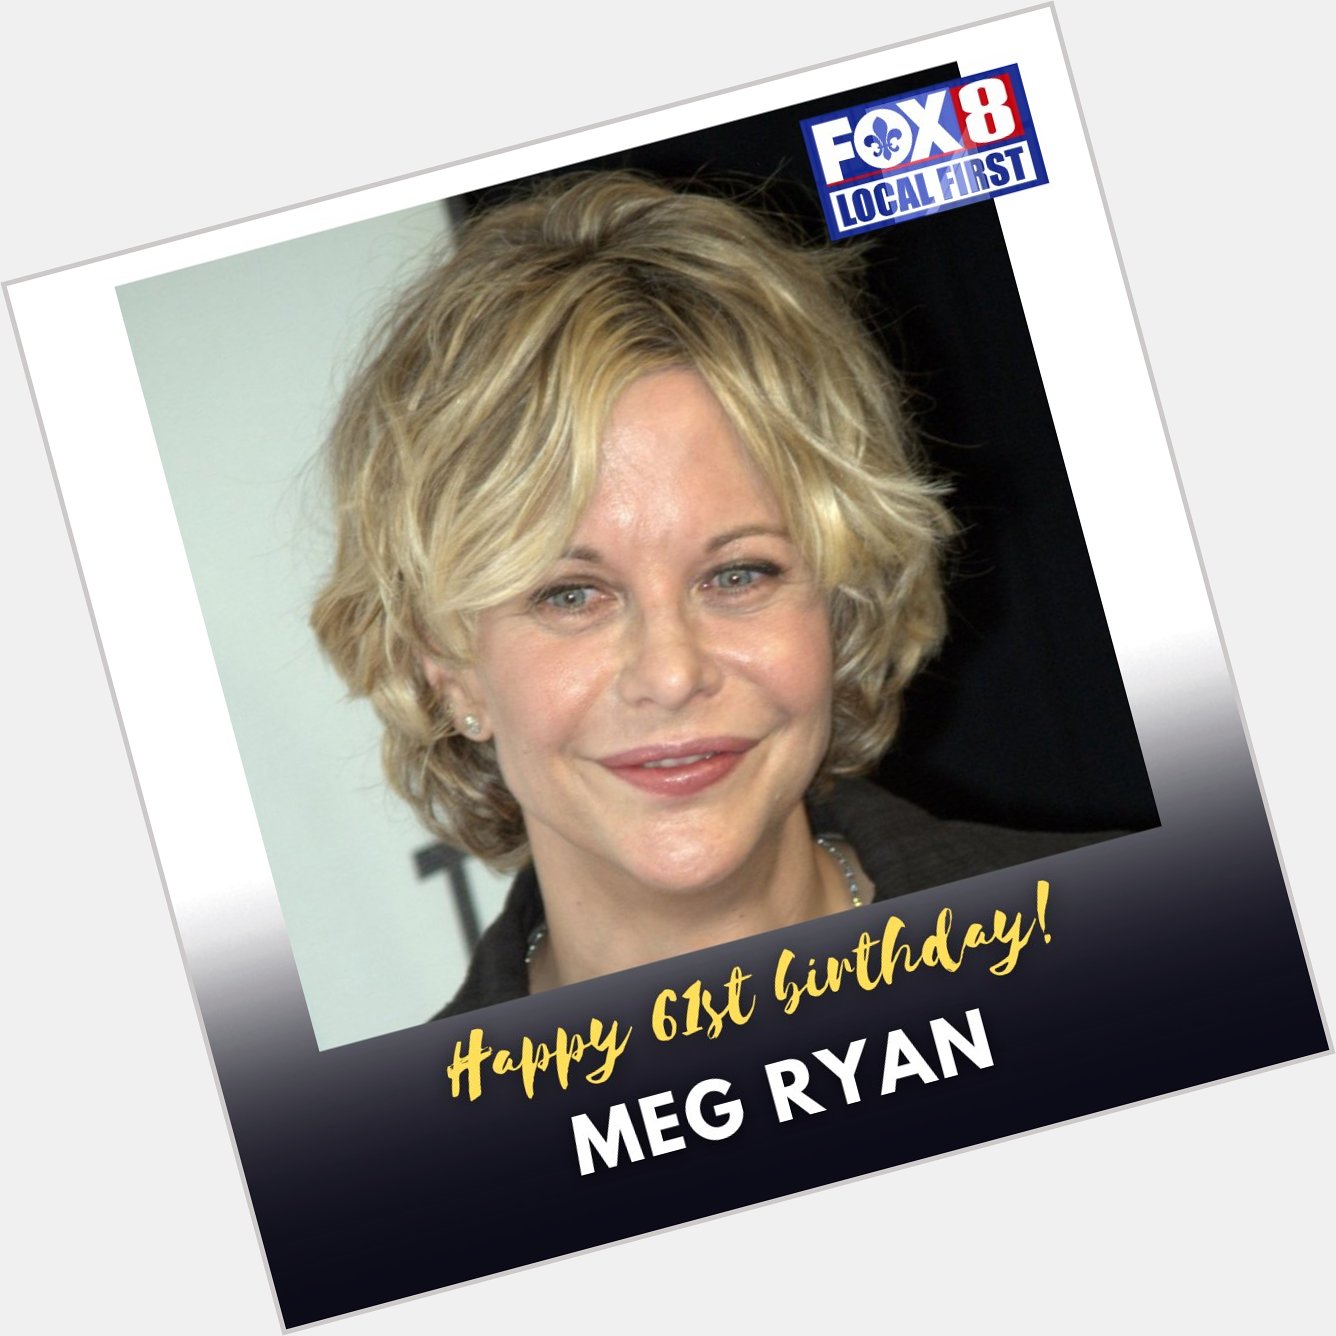 Happy birthday to Meg Ryan, who turned 61 today! 